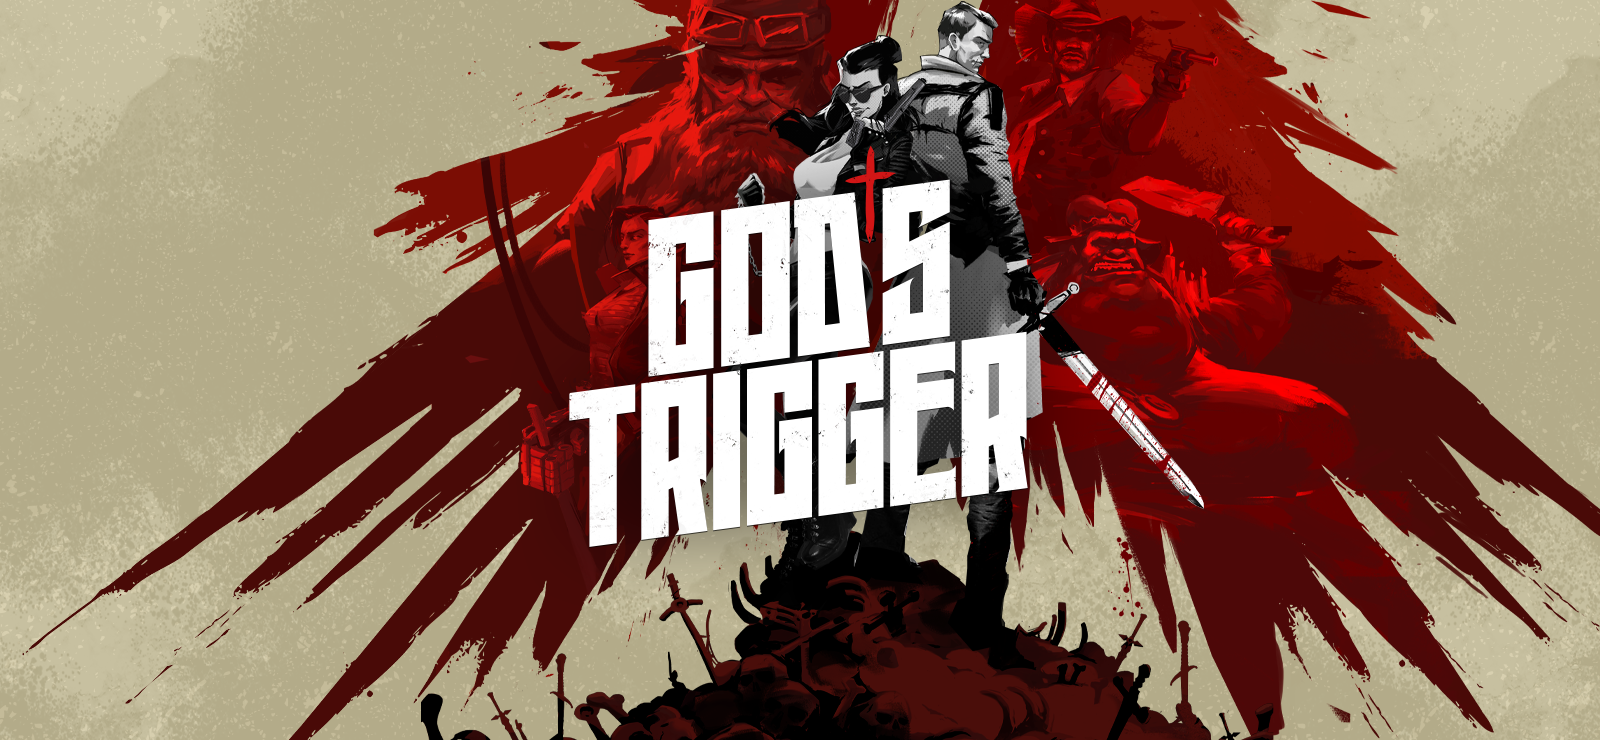 God's Trigger O.M.G. Edition